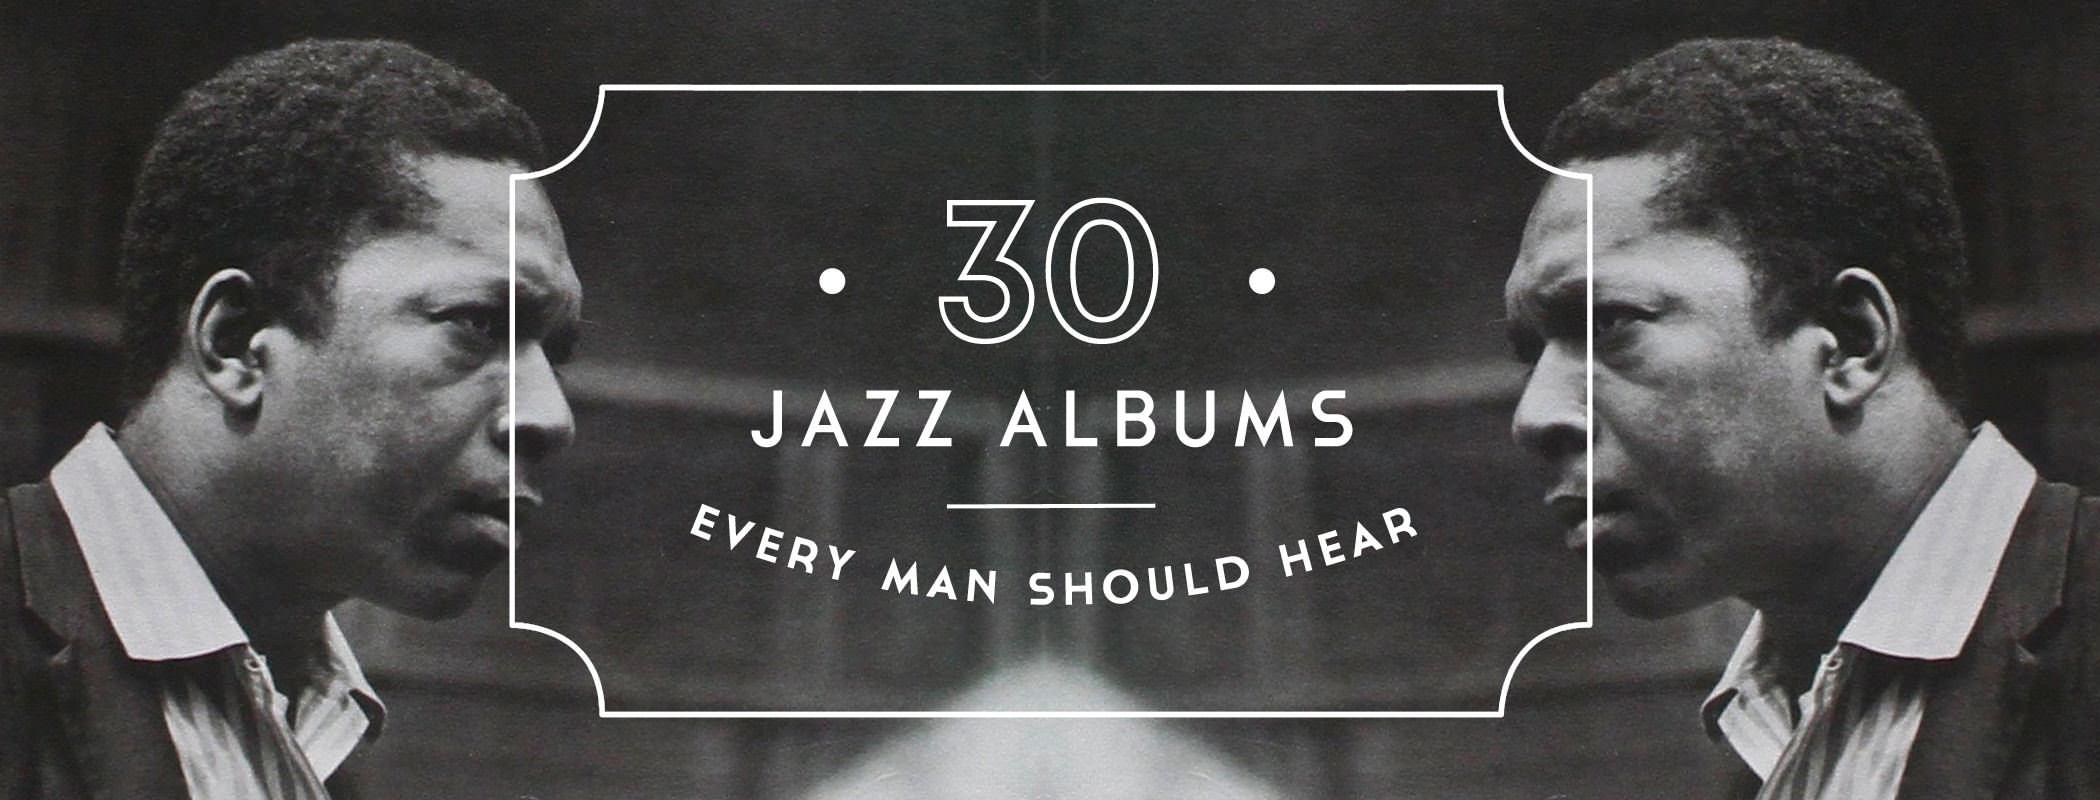 Jazz Albums Every Man Should Hear